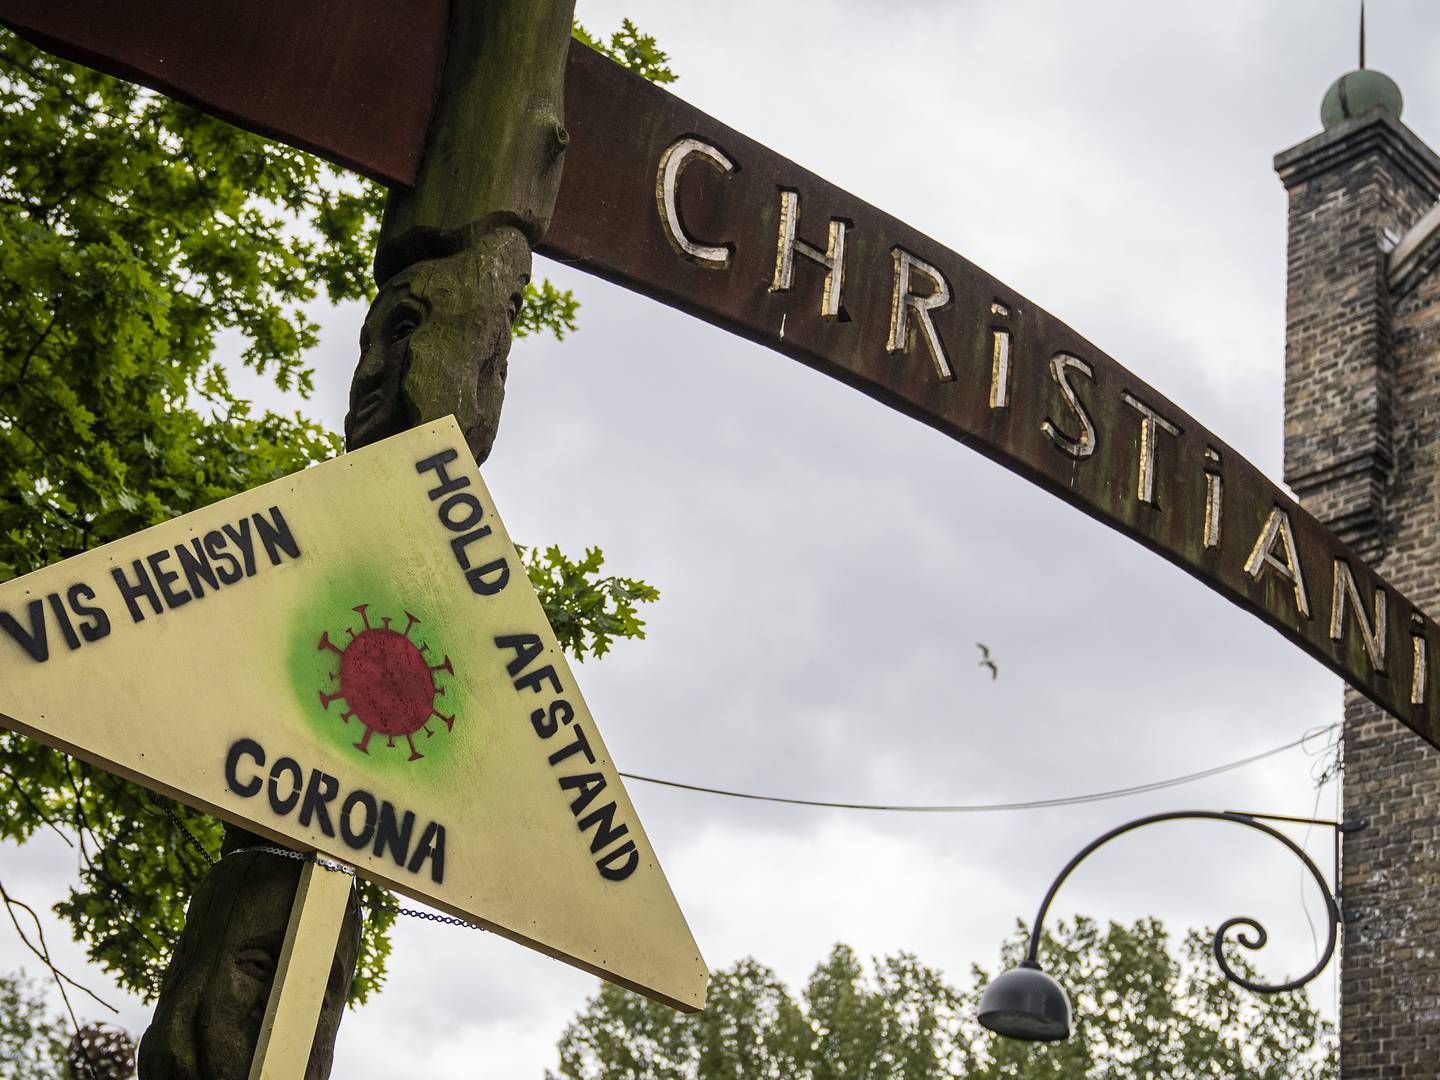 Knud Foldschack vurderer, at Christiania risikerer at ende i en økonomisk uoverskuelig situation. | Foto: Jonas Olufson